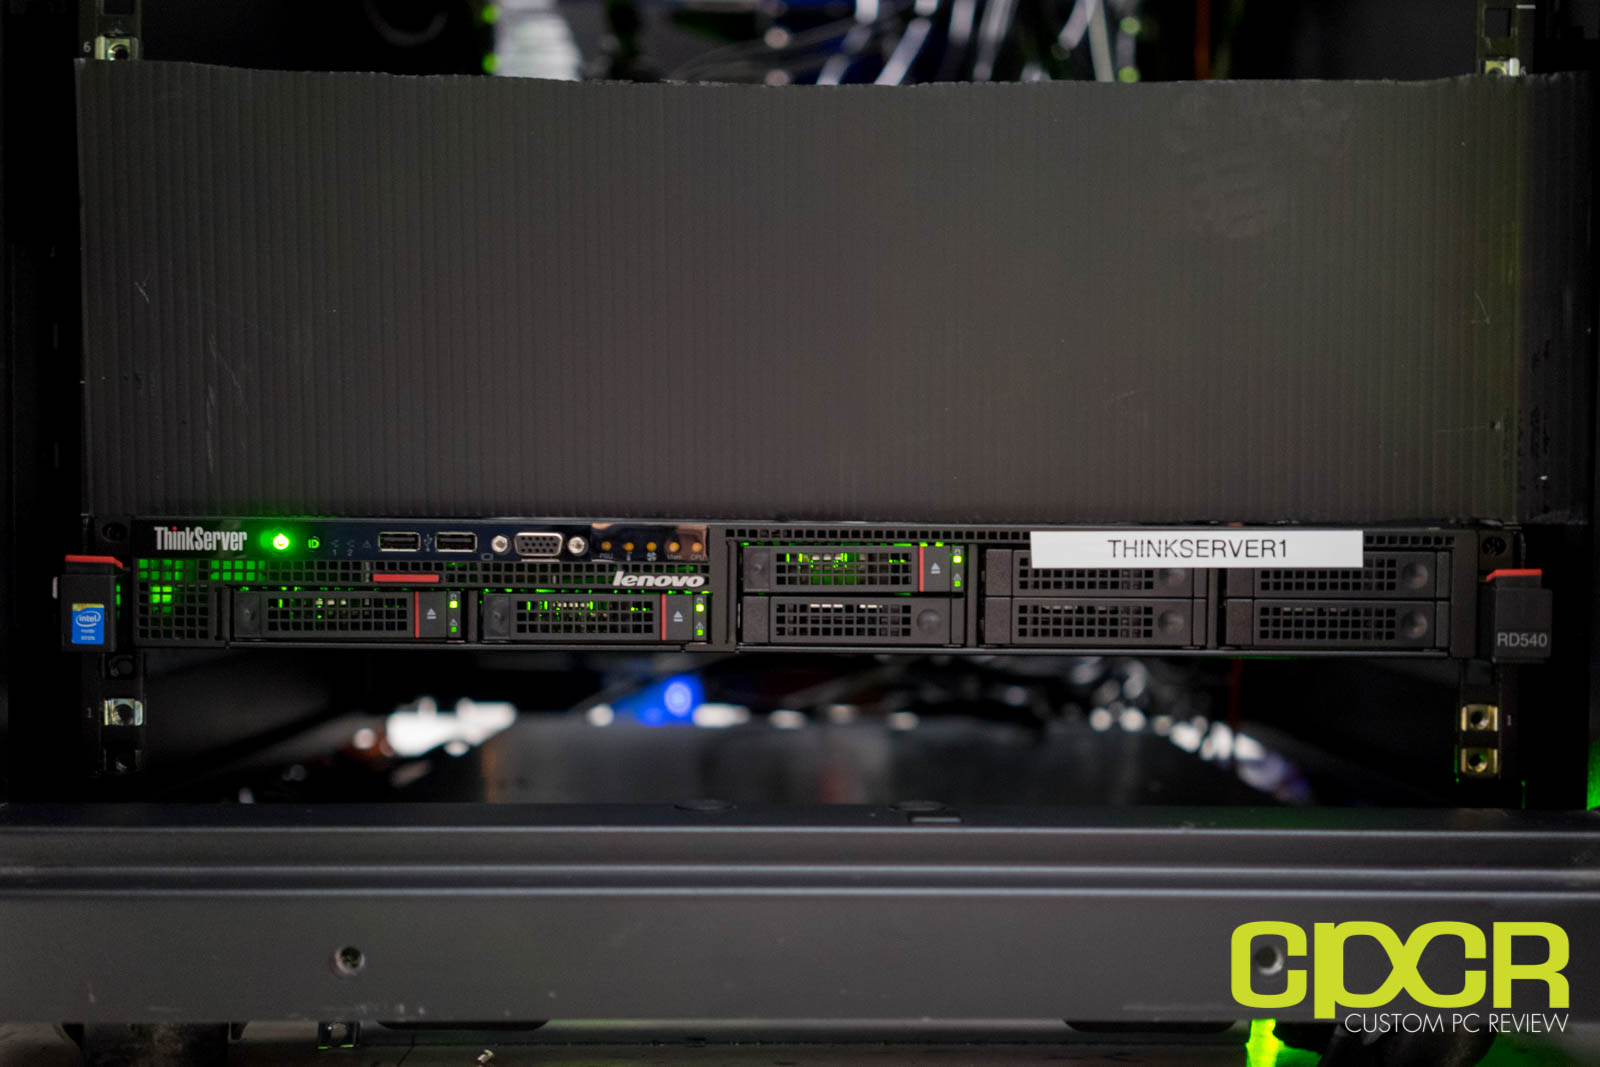 CPCR Server Upgrade 2015: New Hardware Overview